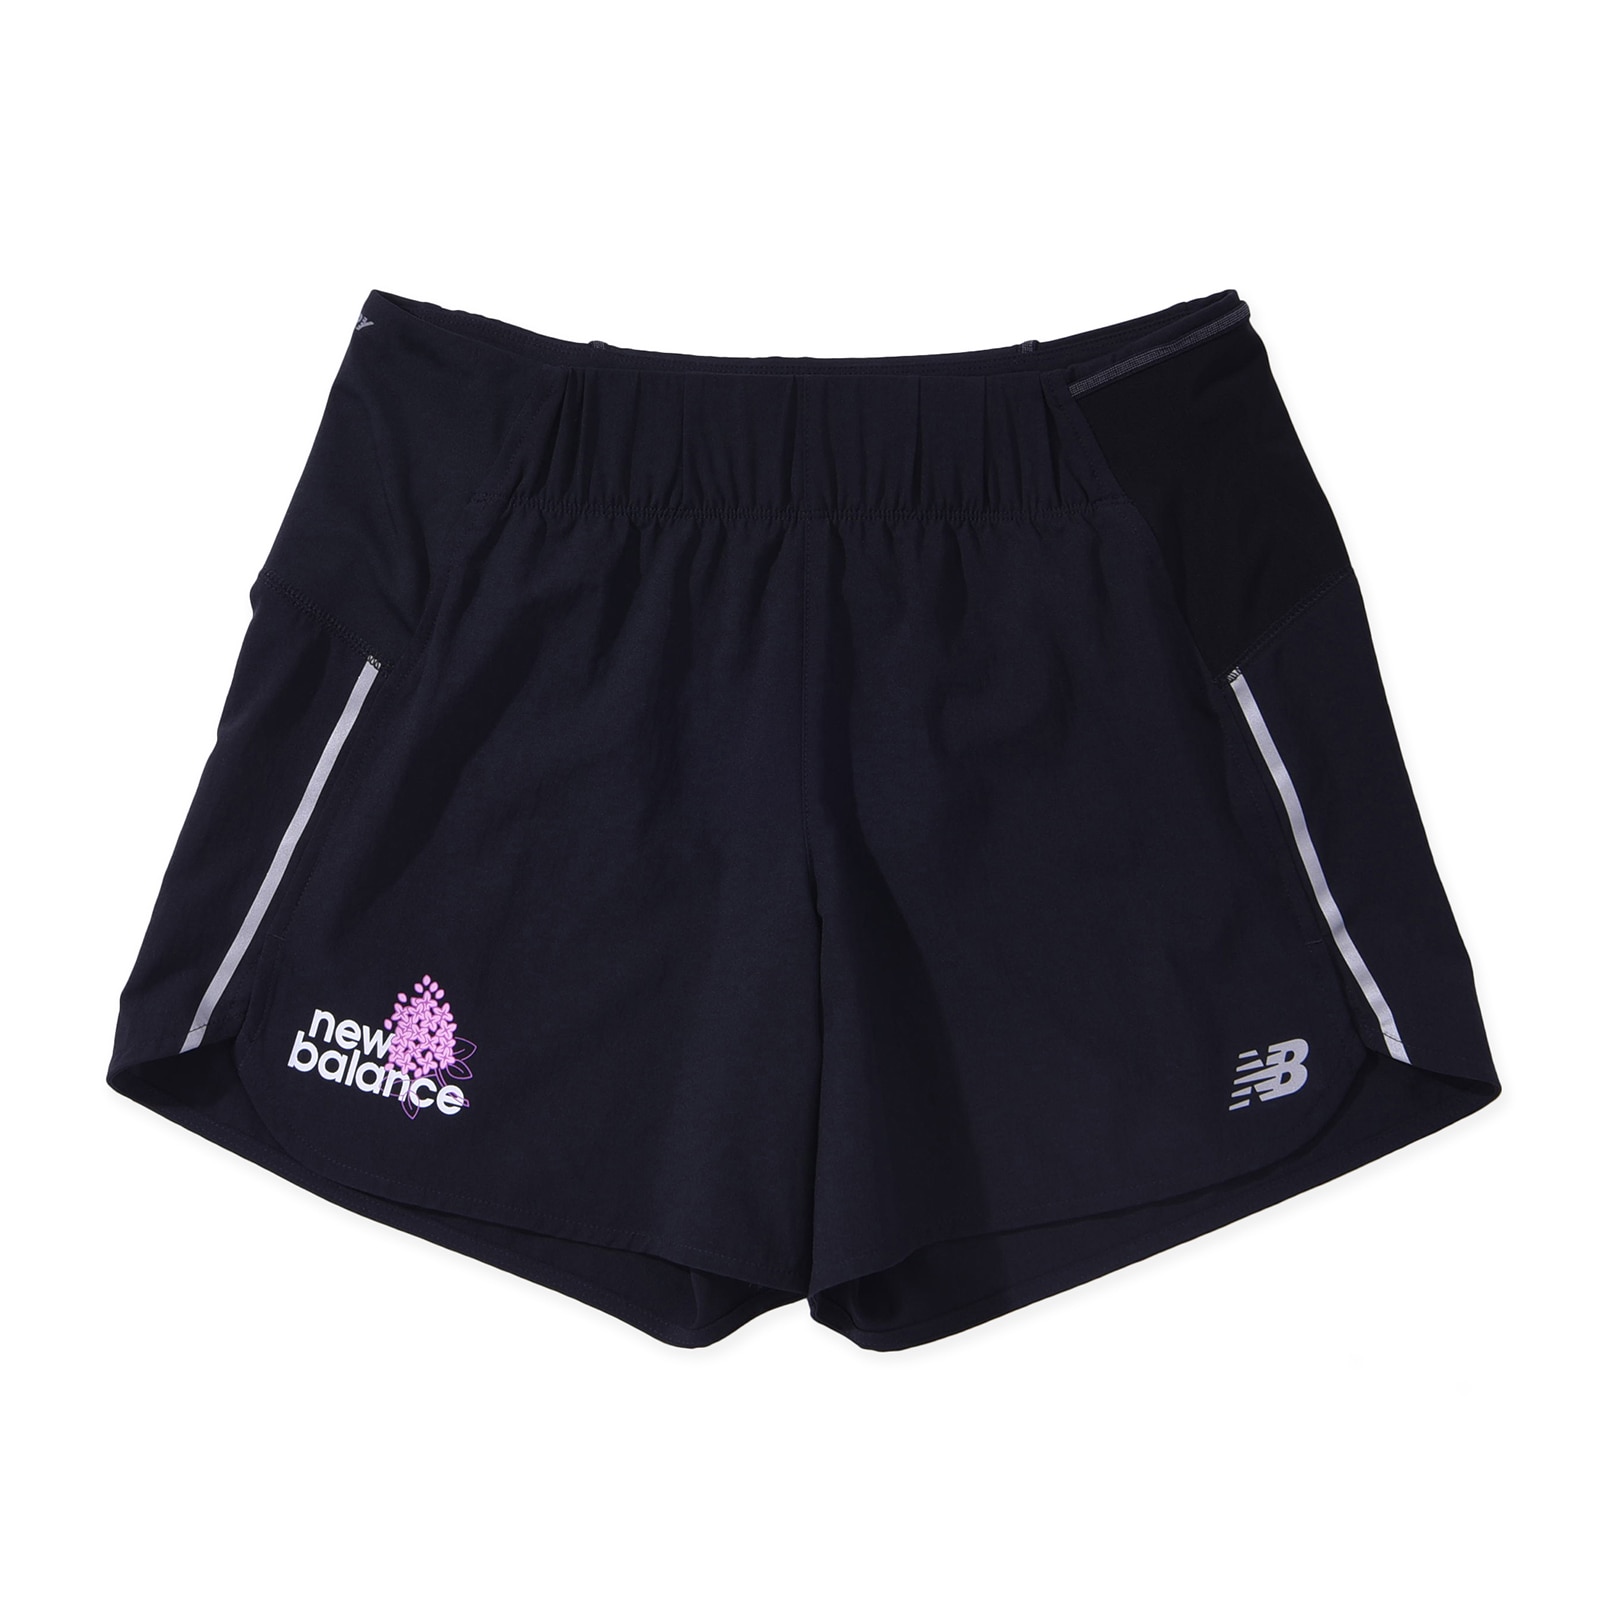 Impact Exclusive 5 inch shorts (no underwear)